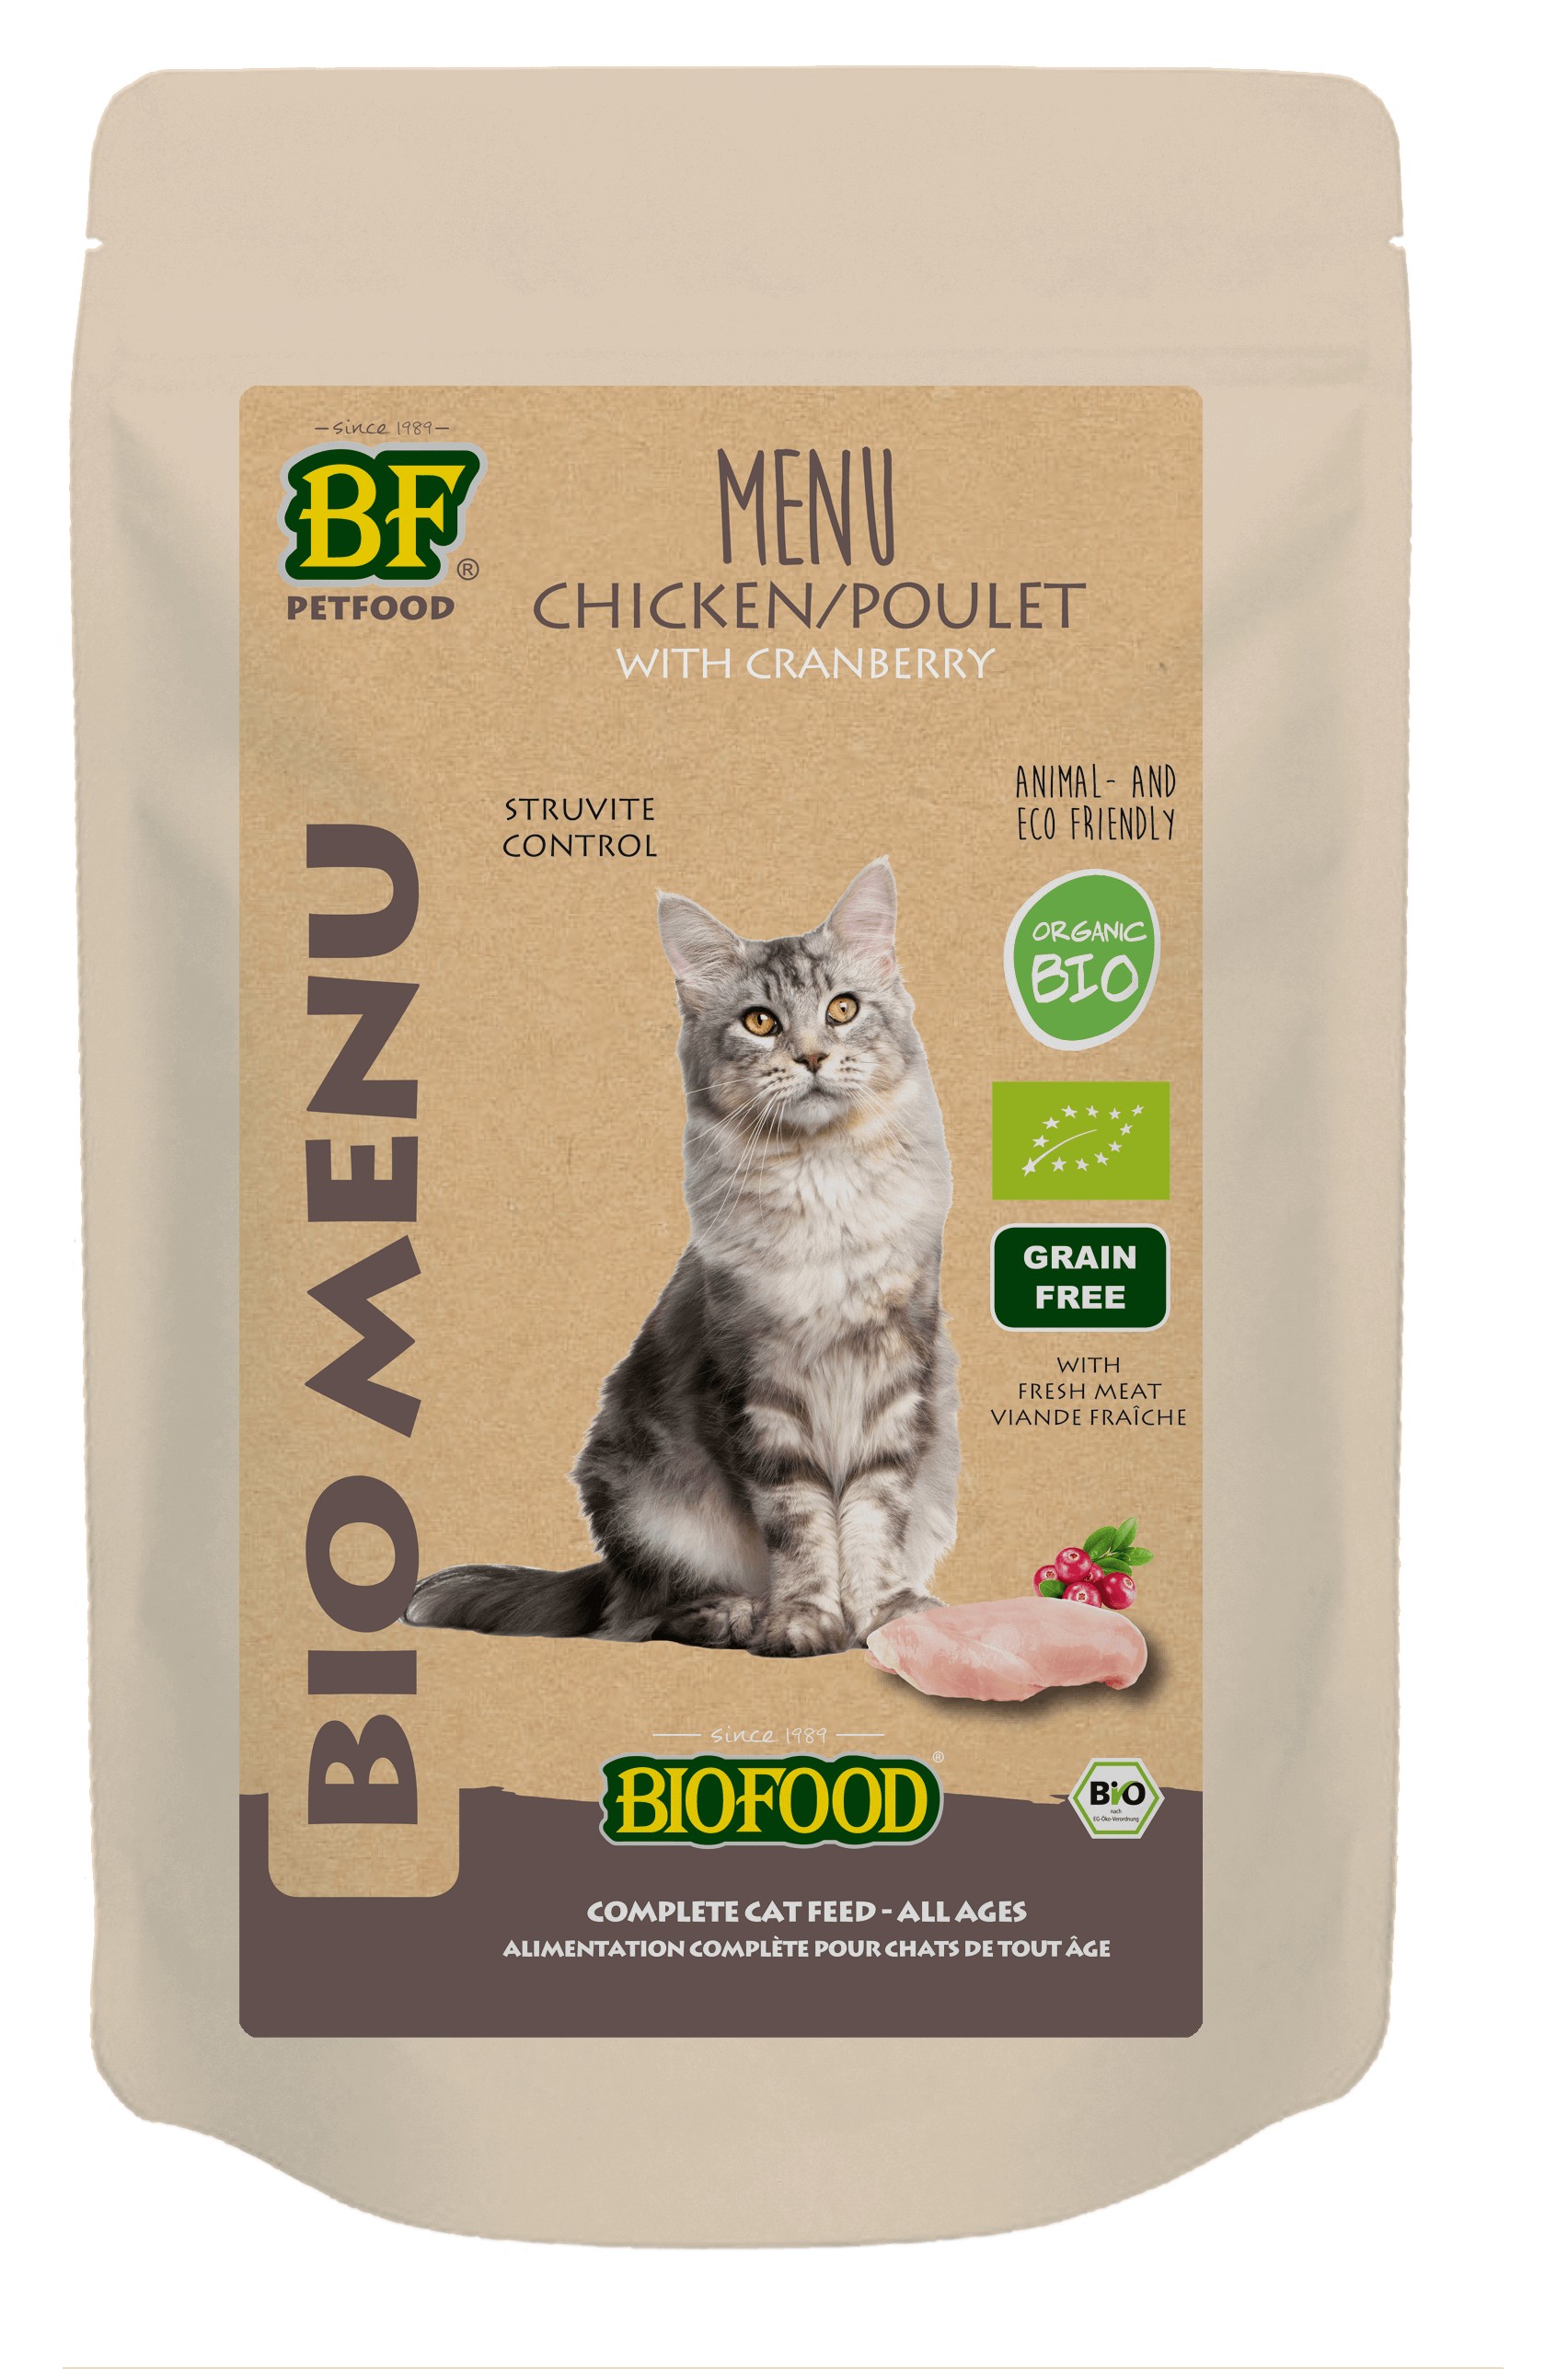 kwartaal Bedankt Elektrisch BF Petfood Biofood Organic Kip Bio Menu Struvite Control